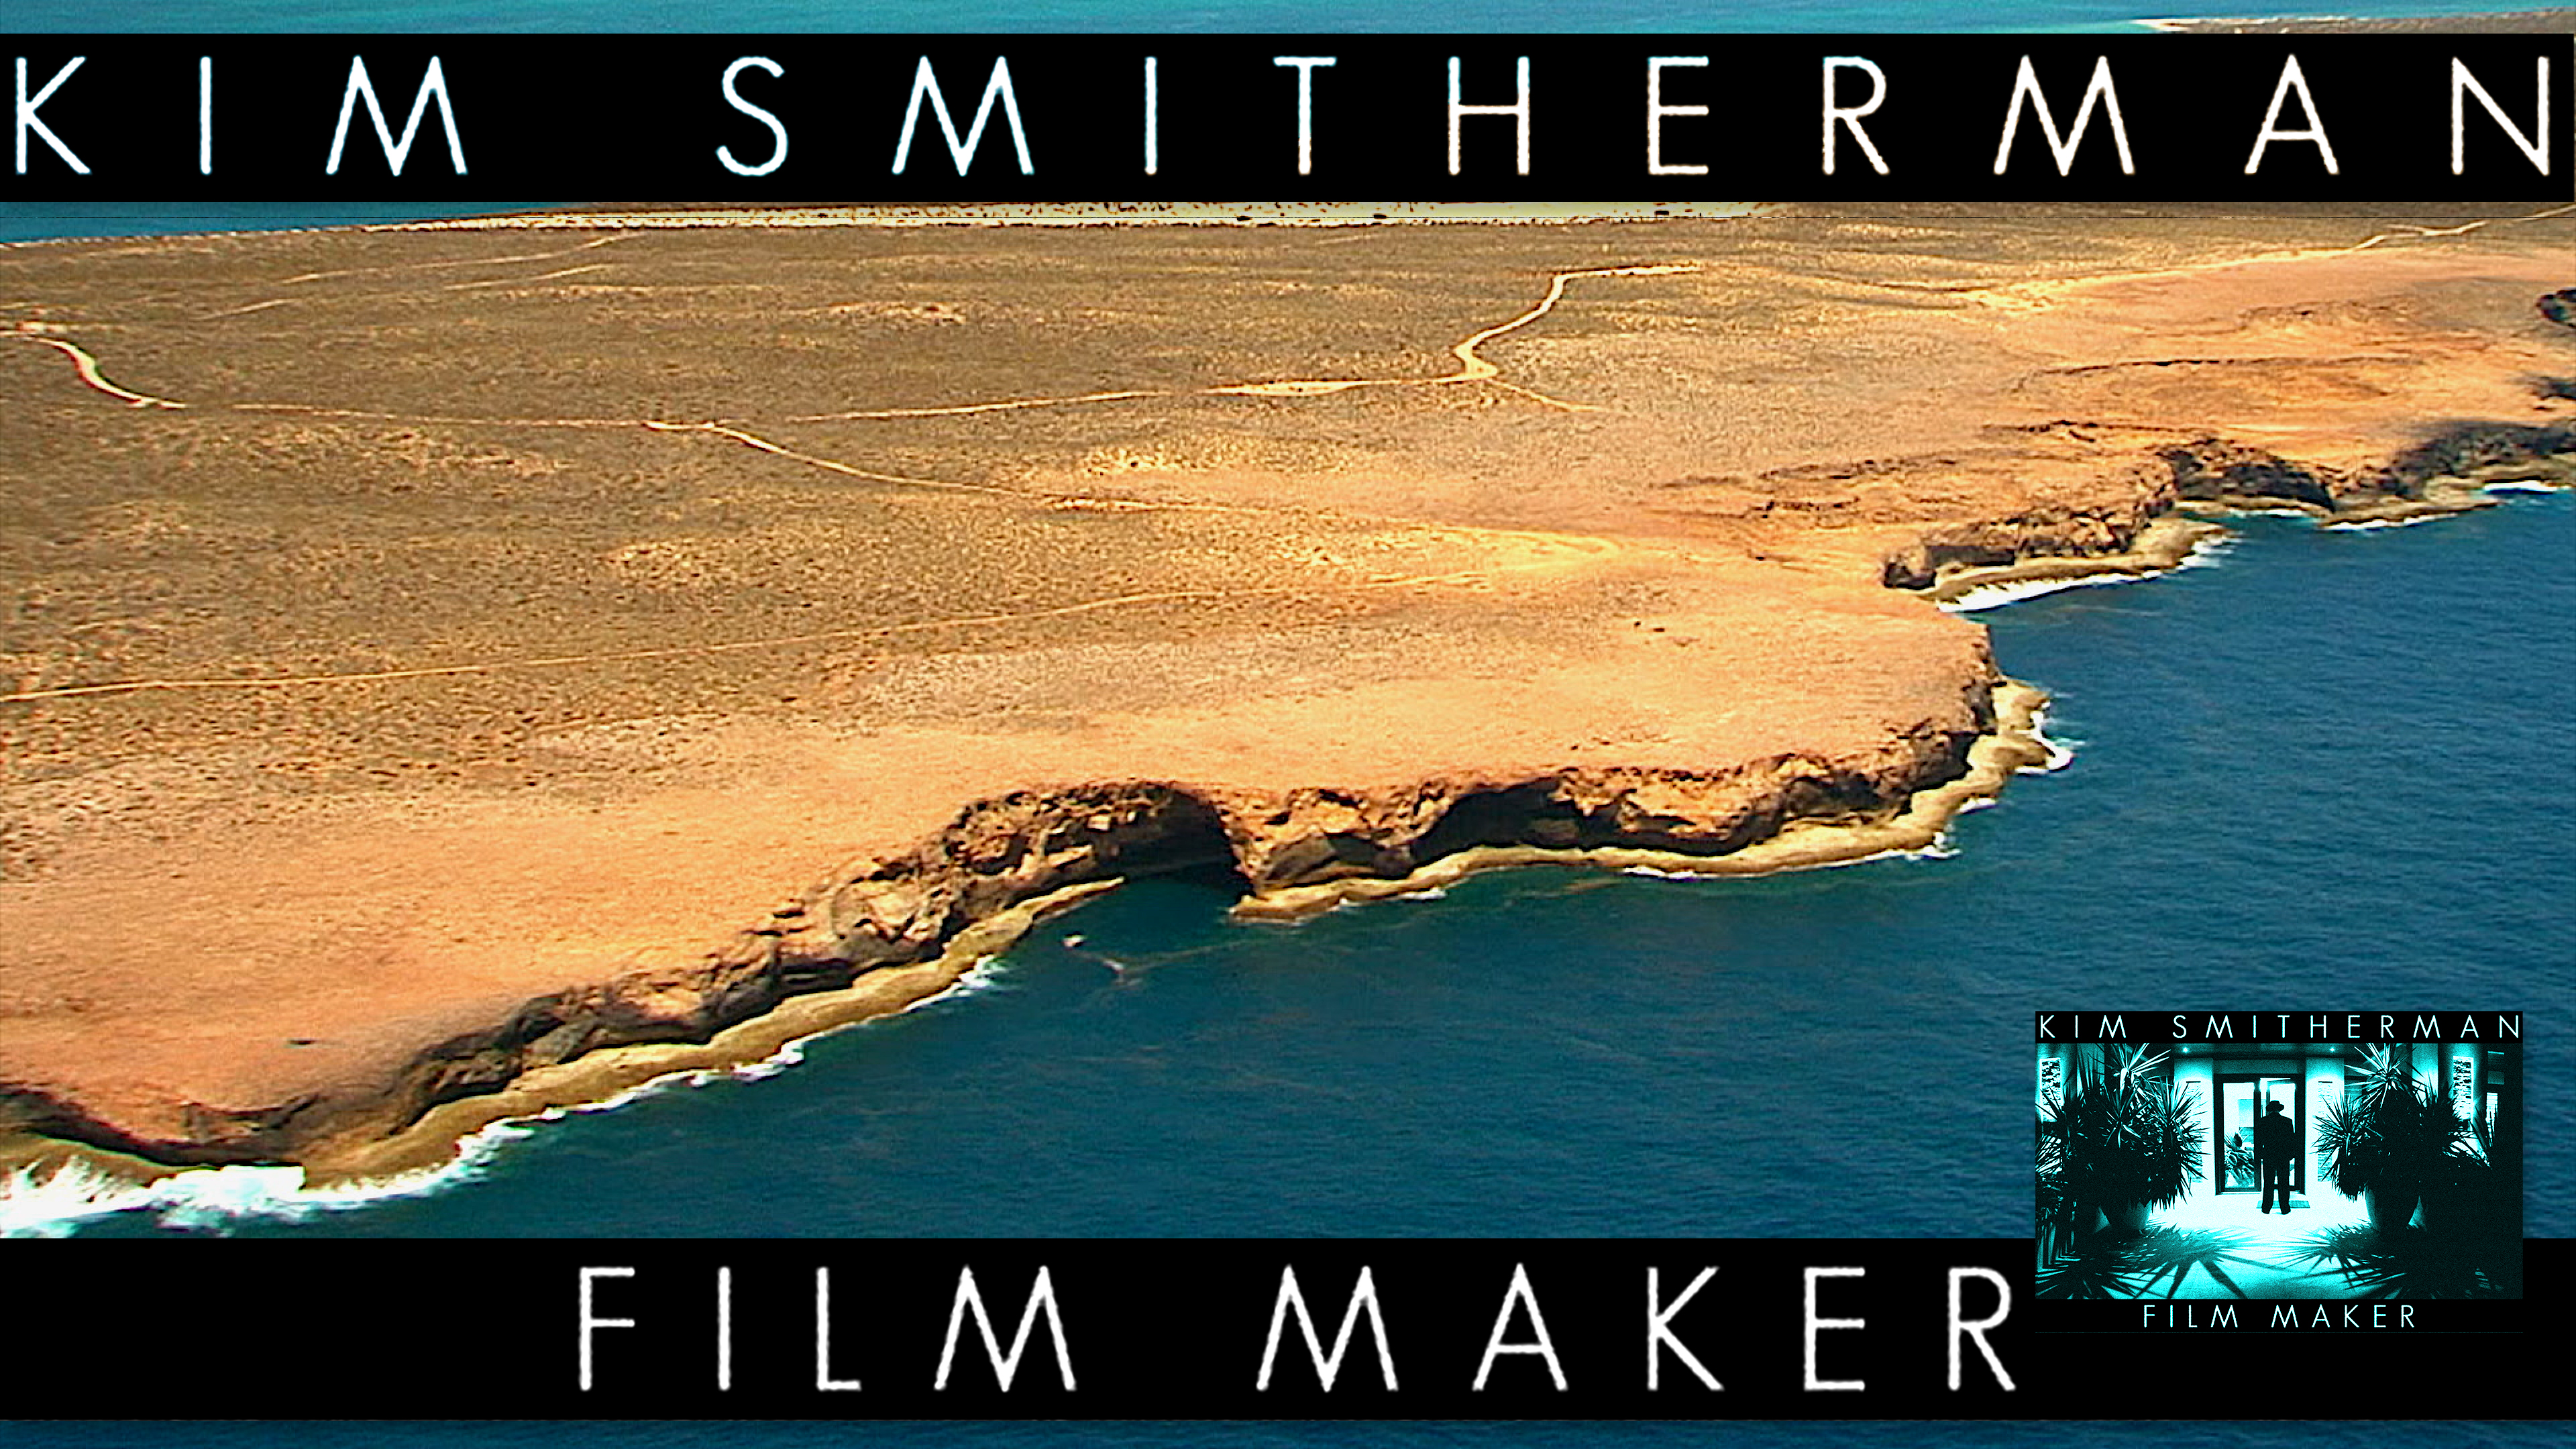 Aerial Kim Smitherman film maker - Dirk Hartog Western Australia